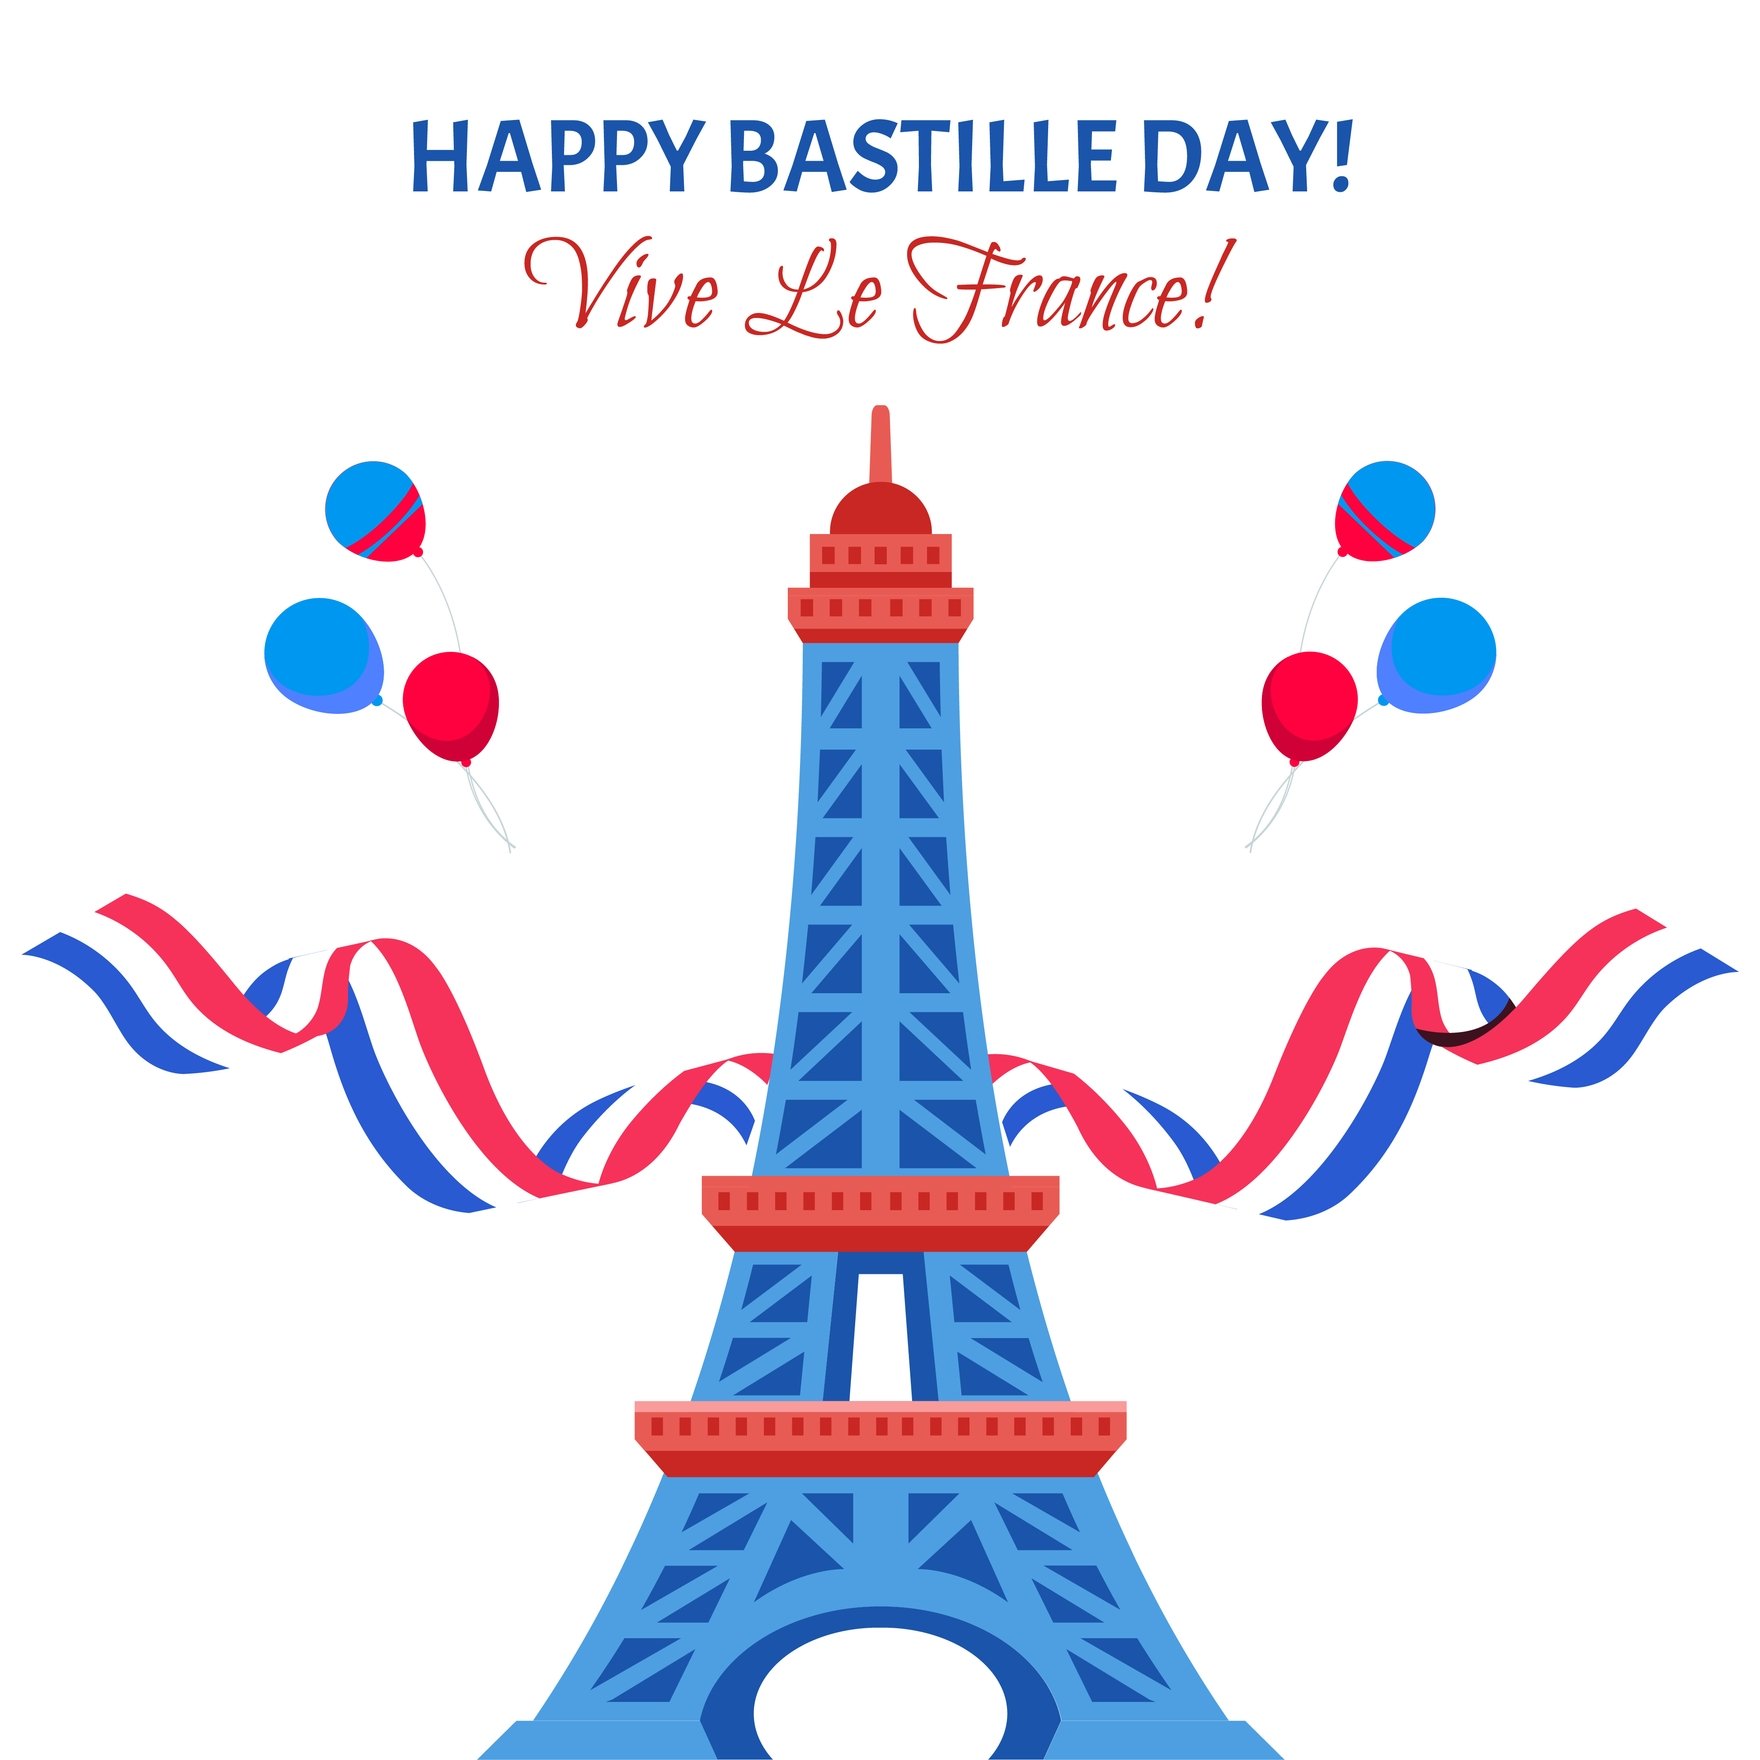 Free Bastille Day Quote Vector in Illustrator, PSD, EPS, SVG, JPG, PNG